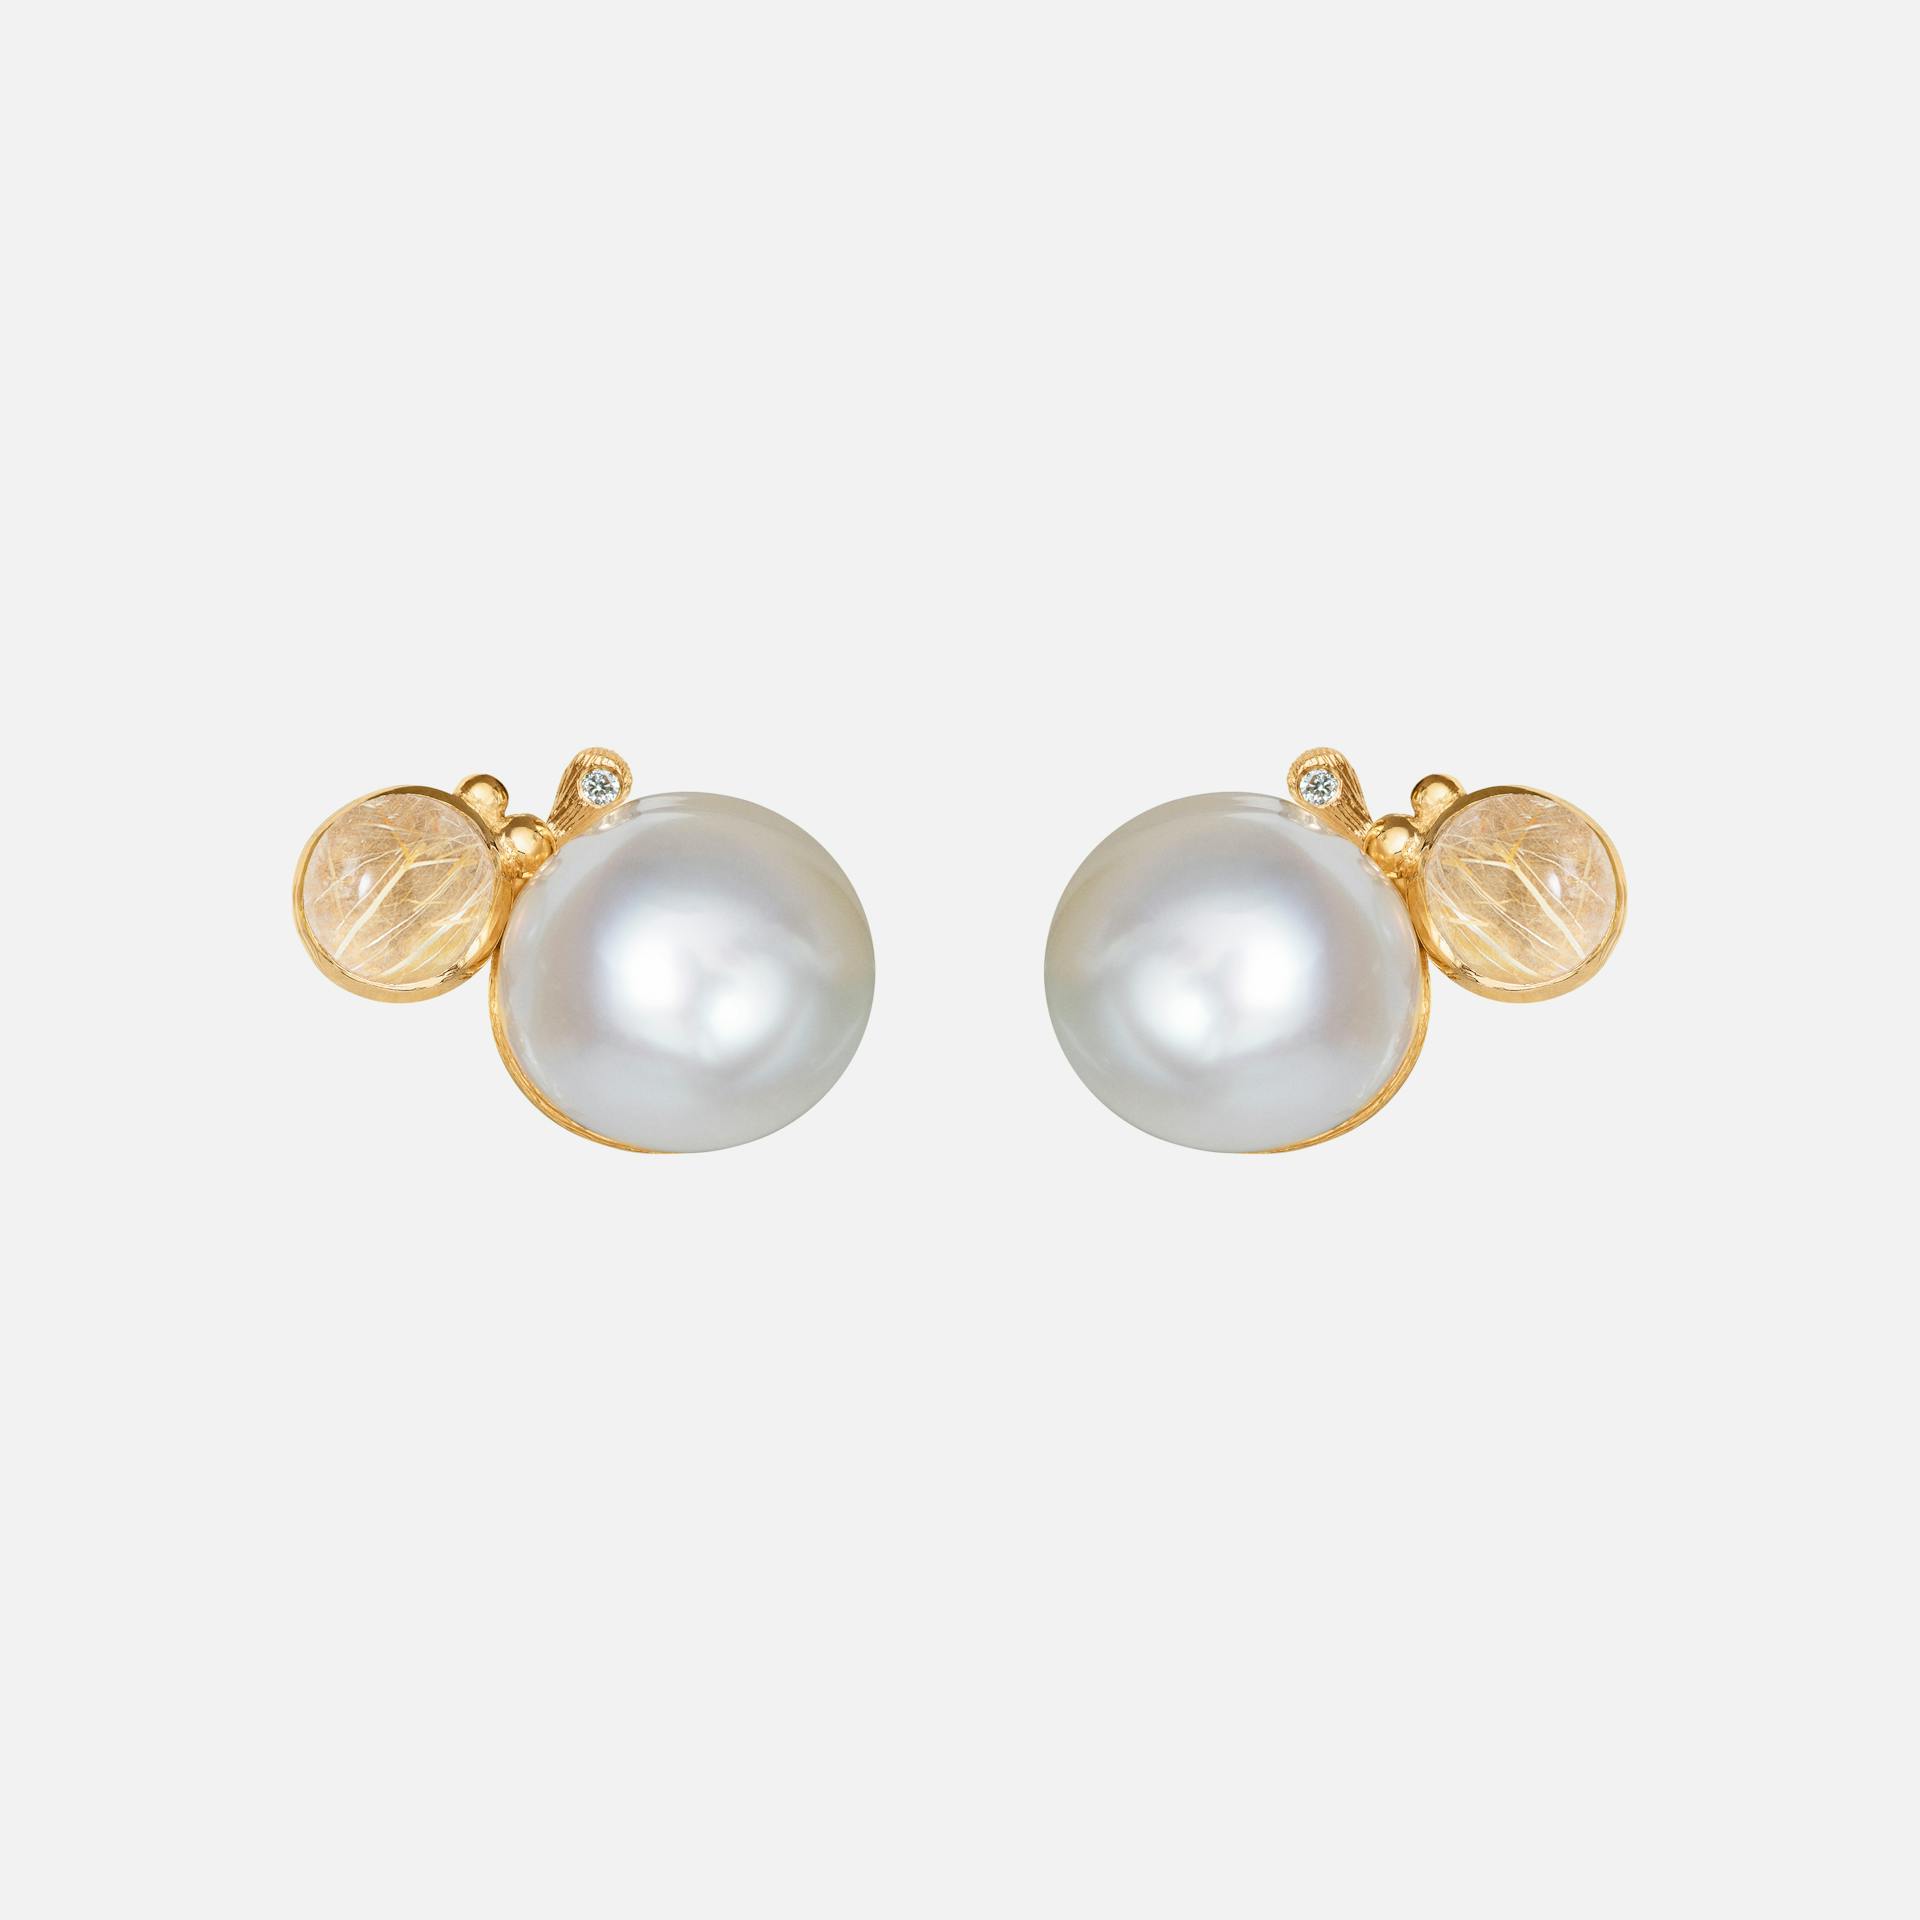 BoHo Pearl Stud Earrings in Gold with Rutile Quartz and Diamonds  |  Ole Lynggaard Copenhagen